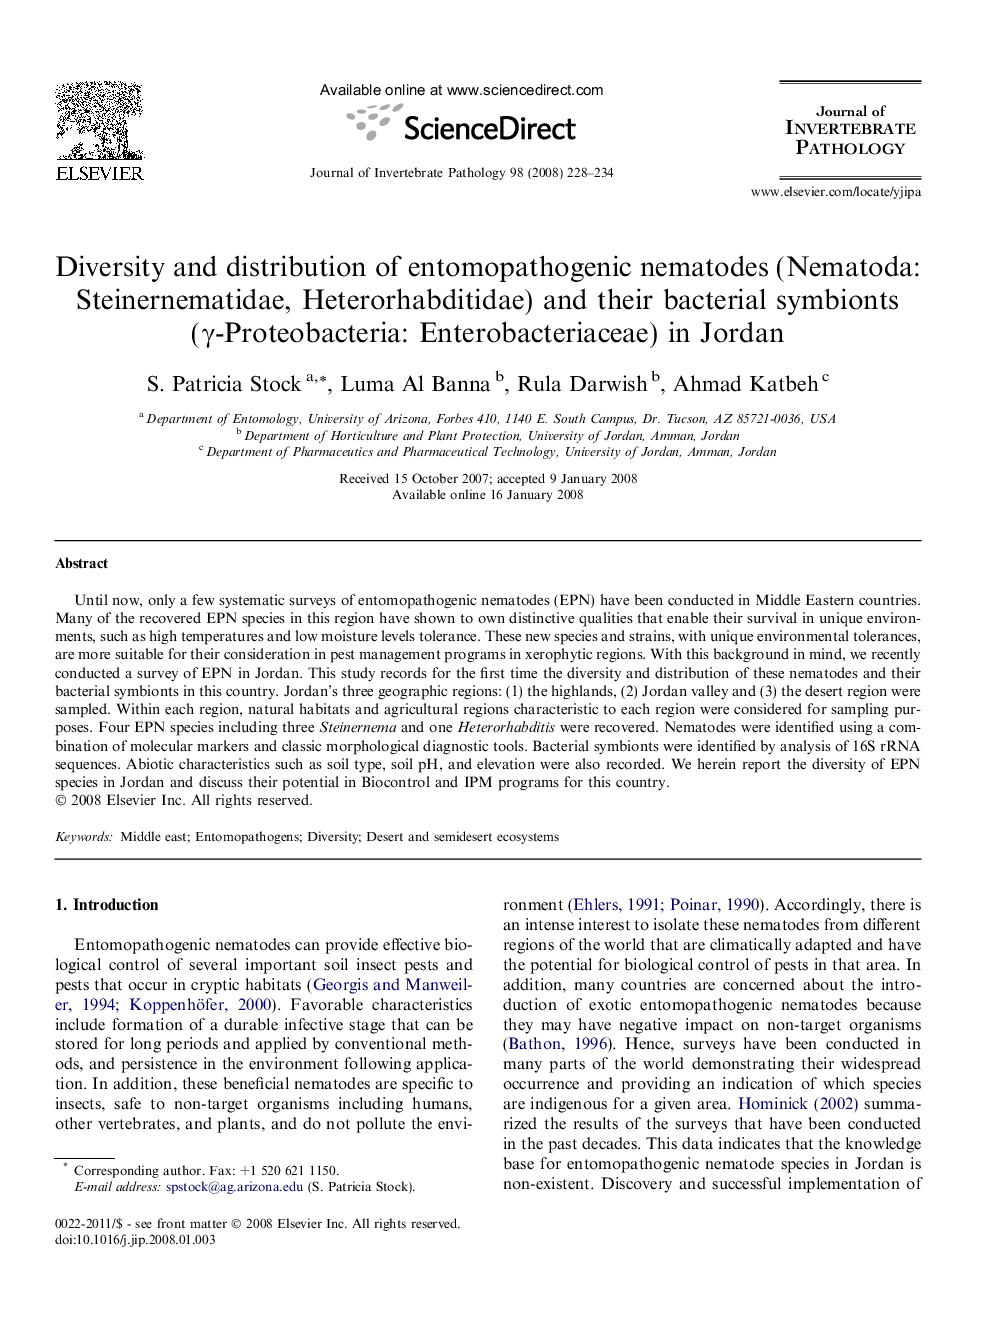 Diversity and distribution of entomopathogenic nematodes (Nematoda: Steinernematidae, Heterorhabditidae) and their bacterial symbionts (γ-Proteobacteria: Enterobacteriaceae) in Jordan